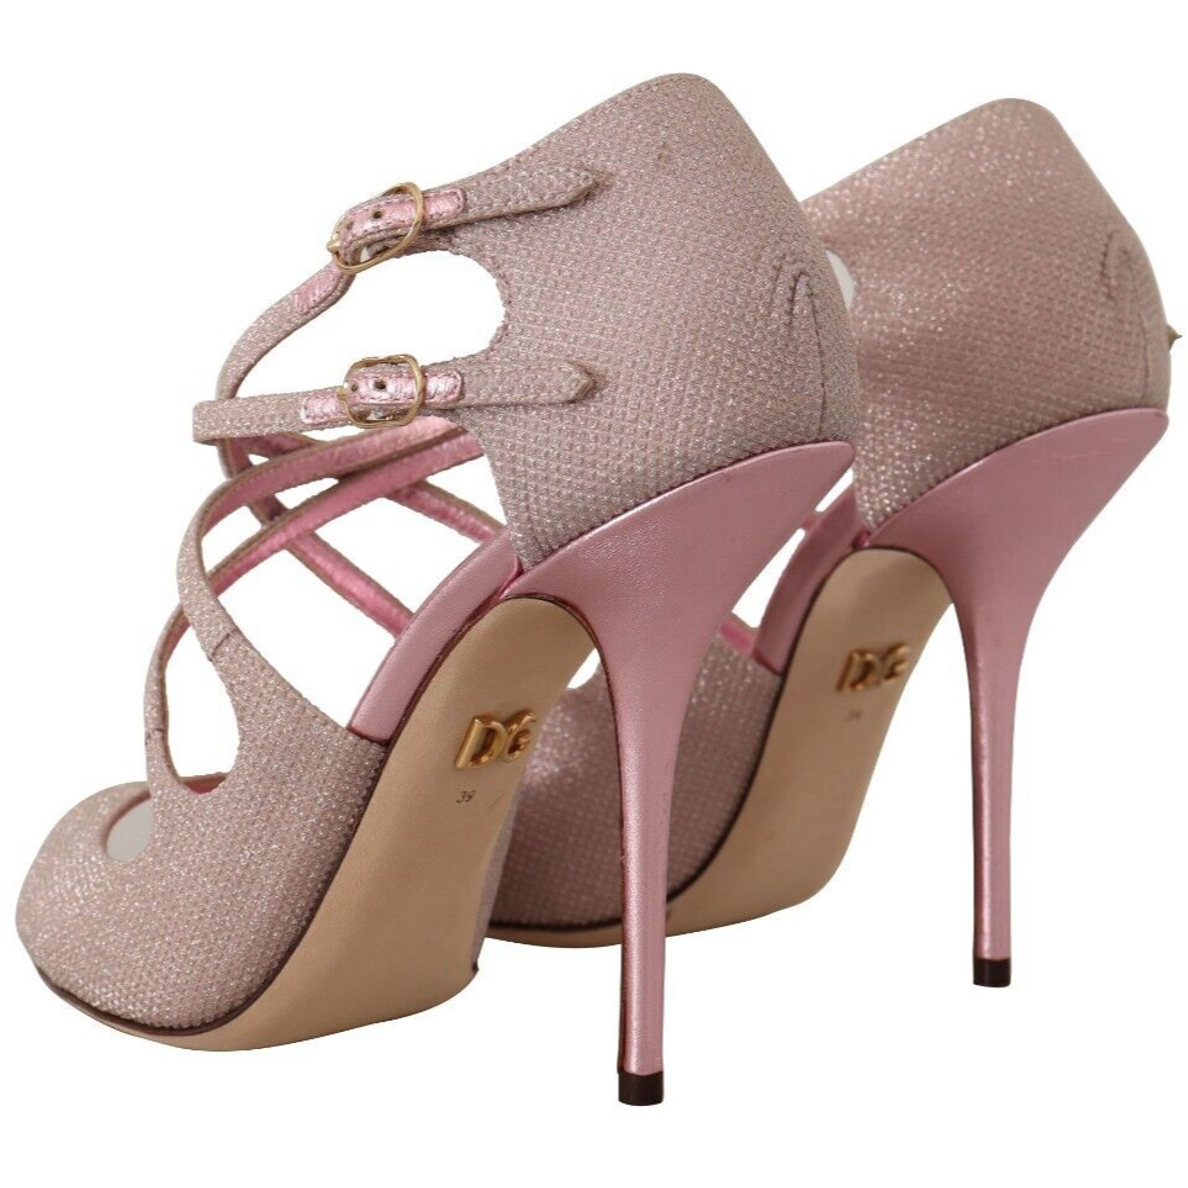 Dolce & Gabbana Pink Glitter Peep Toe High Heels Sandals pink-glittered-strappy-heels-sandals-shoes s-l1600-3-1-94ea70d9-cb2.png